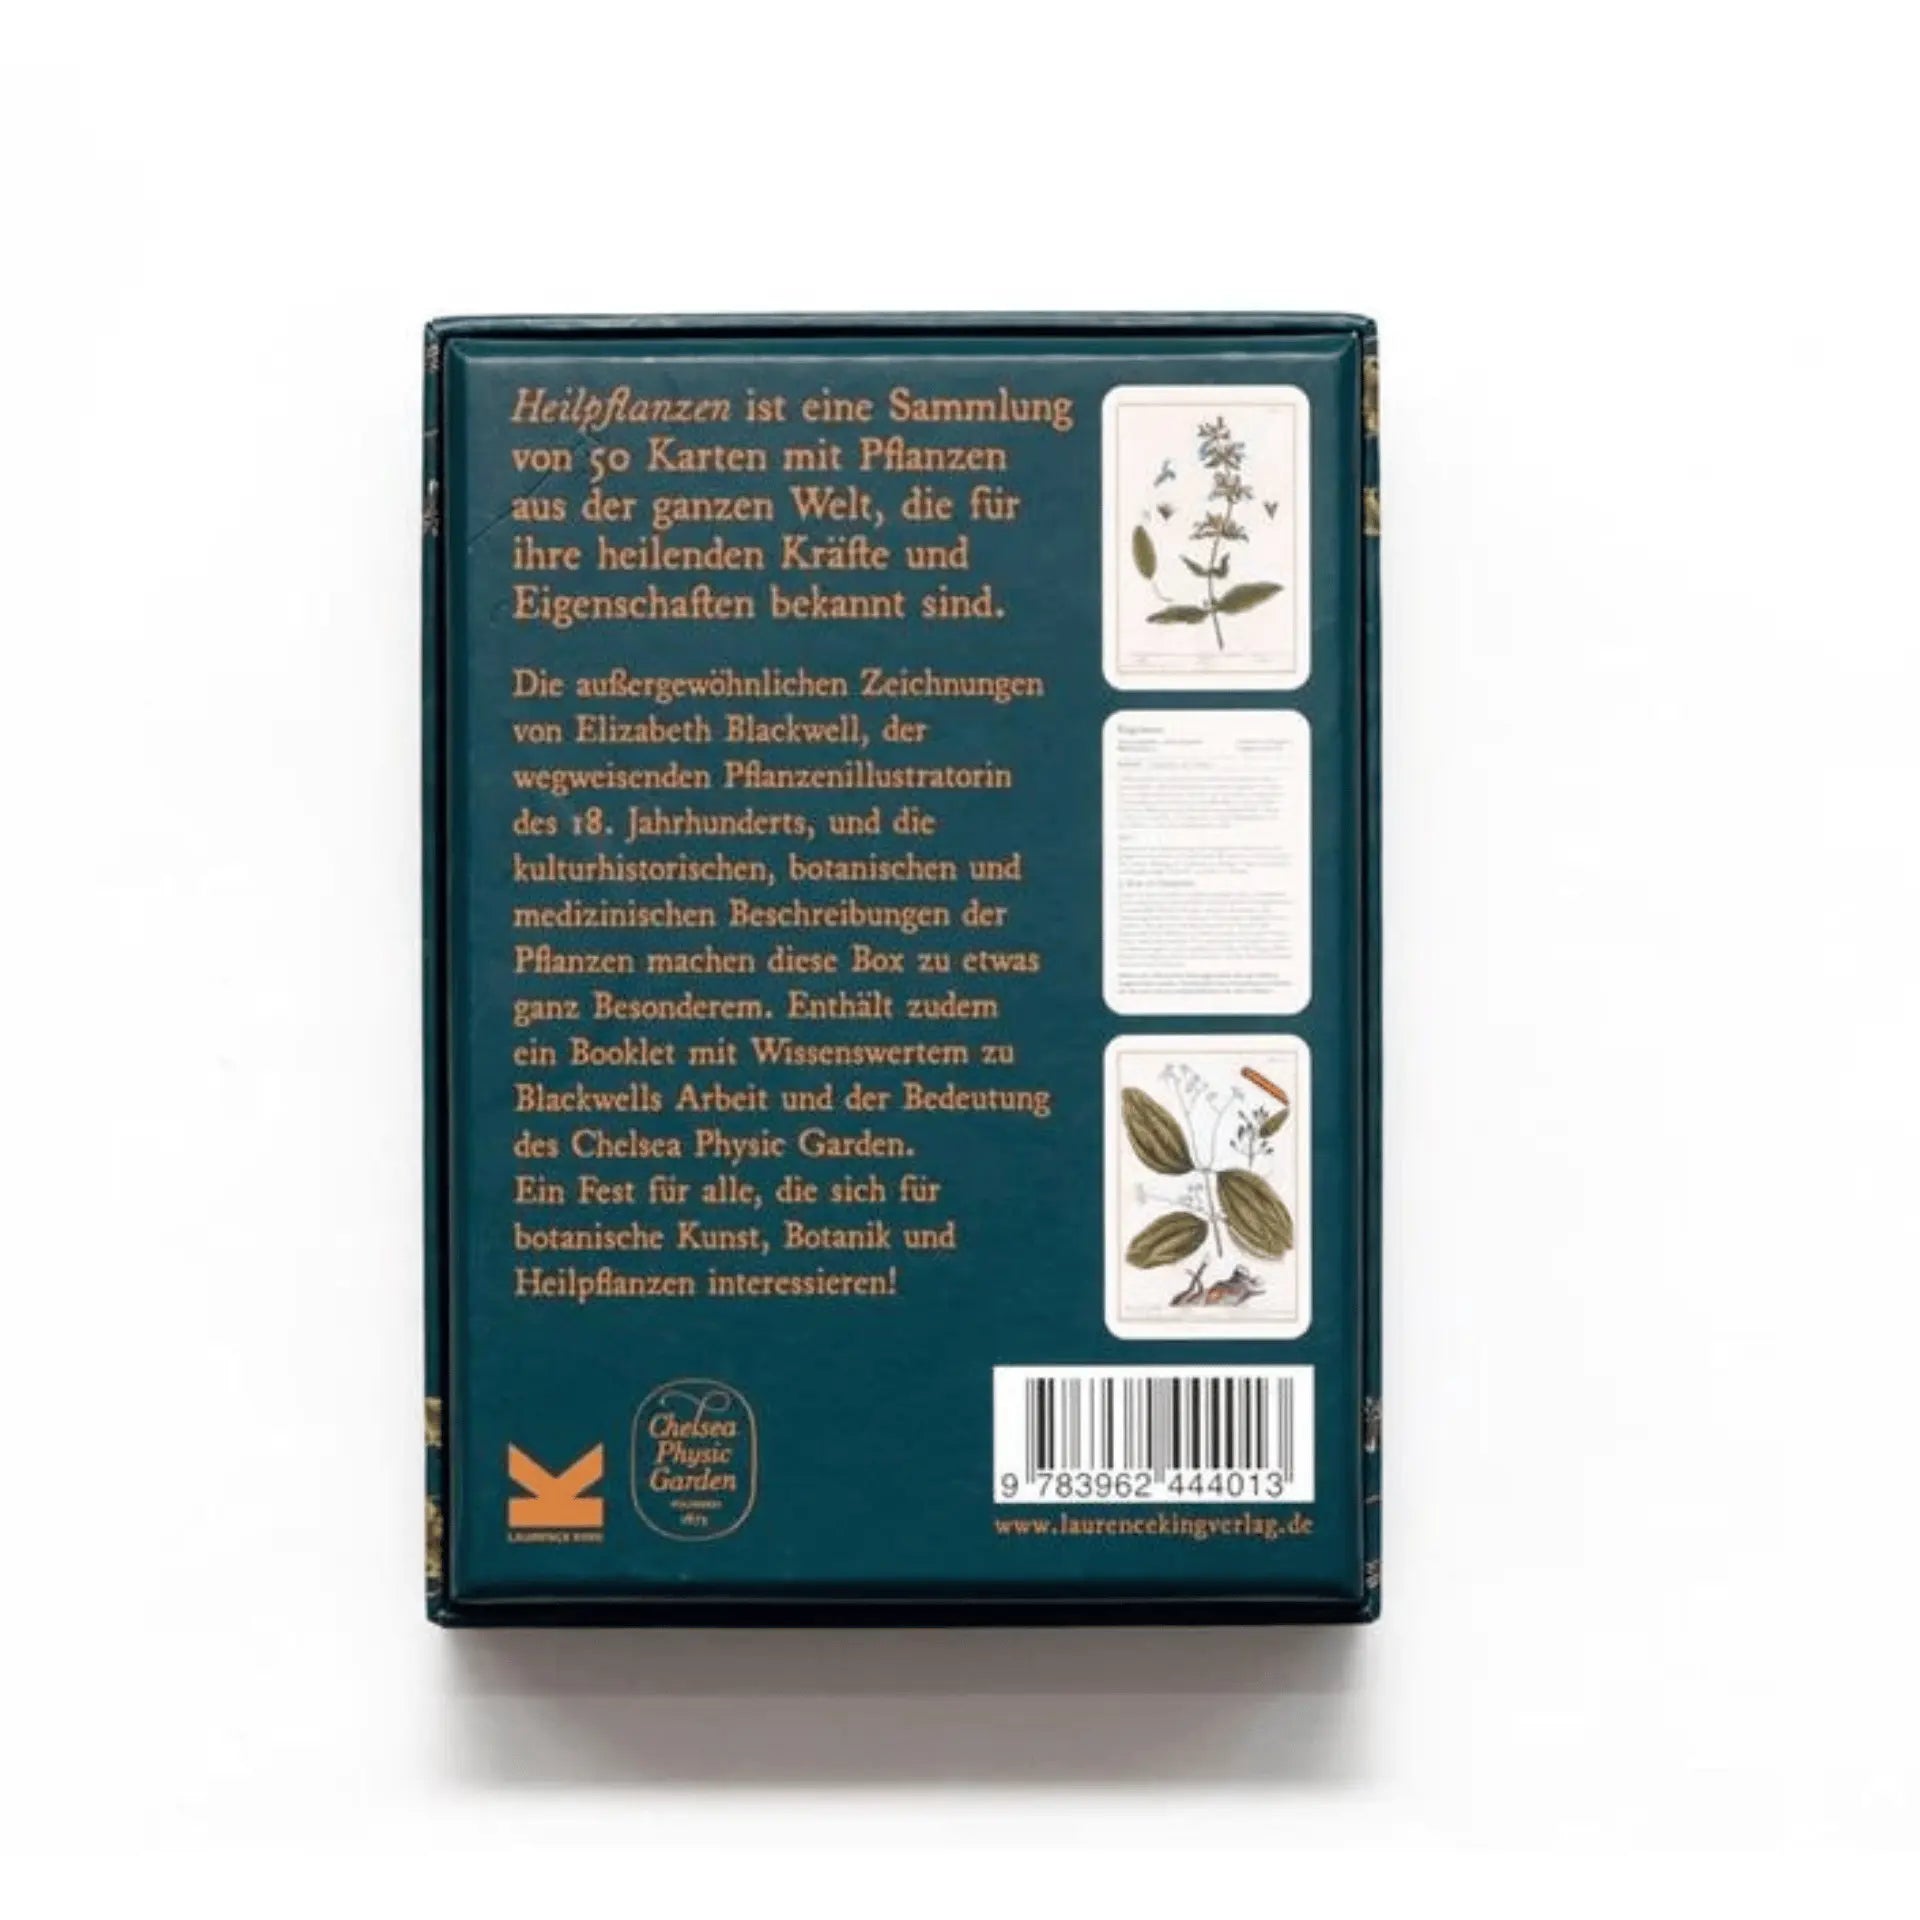 Heilpflanzen | 50 botanische Karten Laurence King Verlag